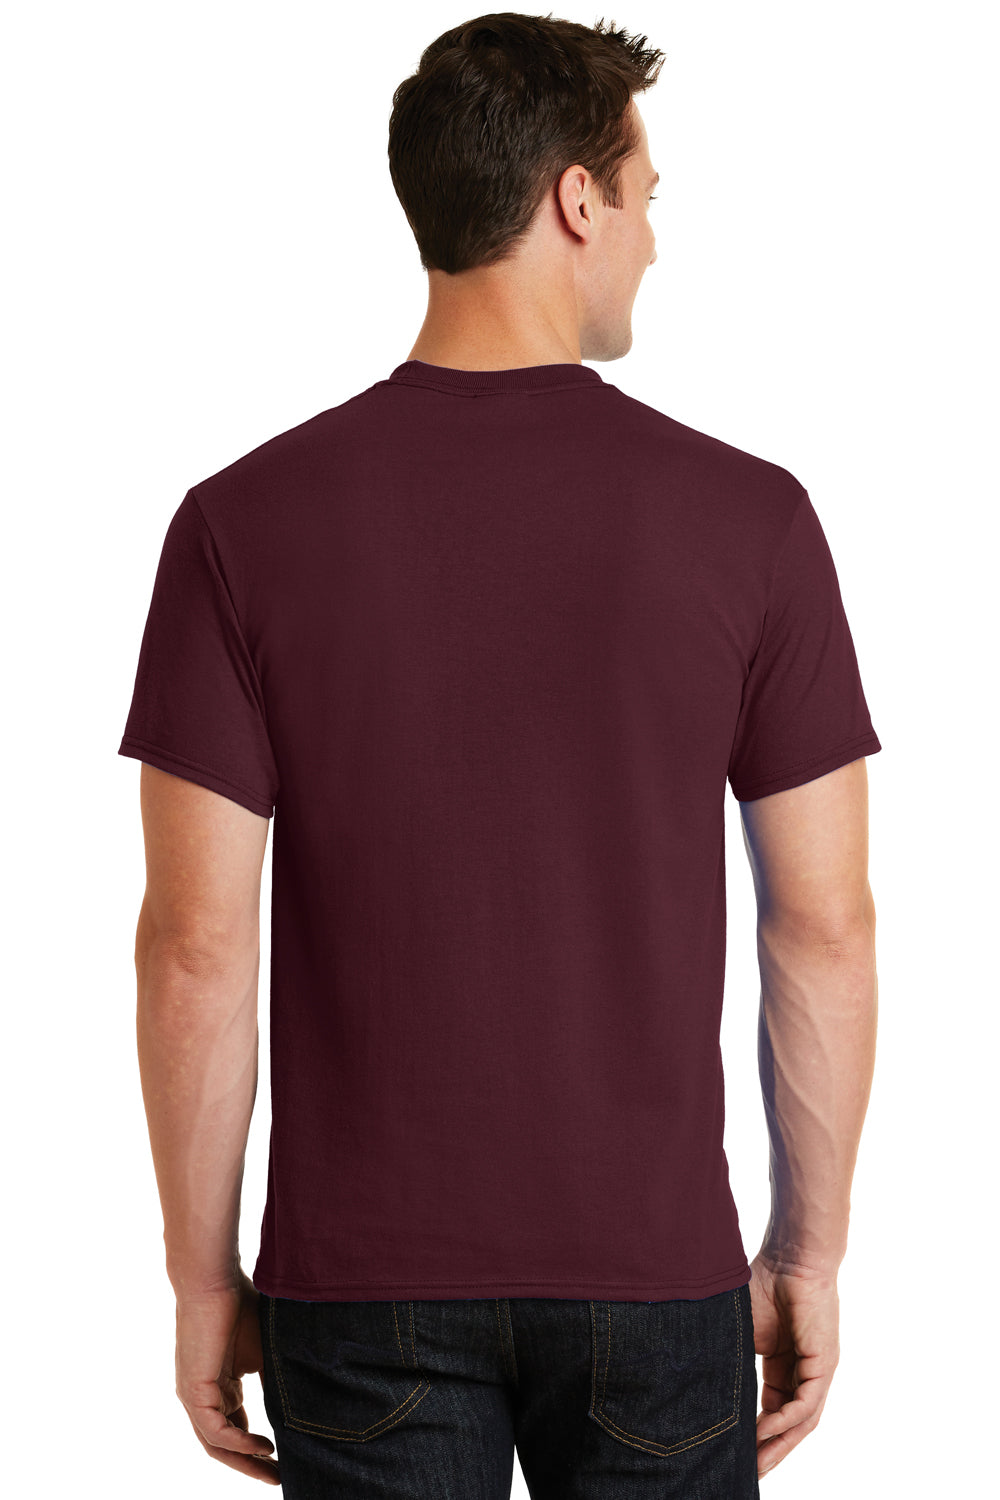 Port & Company PC55 Mens Core Short Sleeve Crewneck T-Shirt Maroon Back